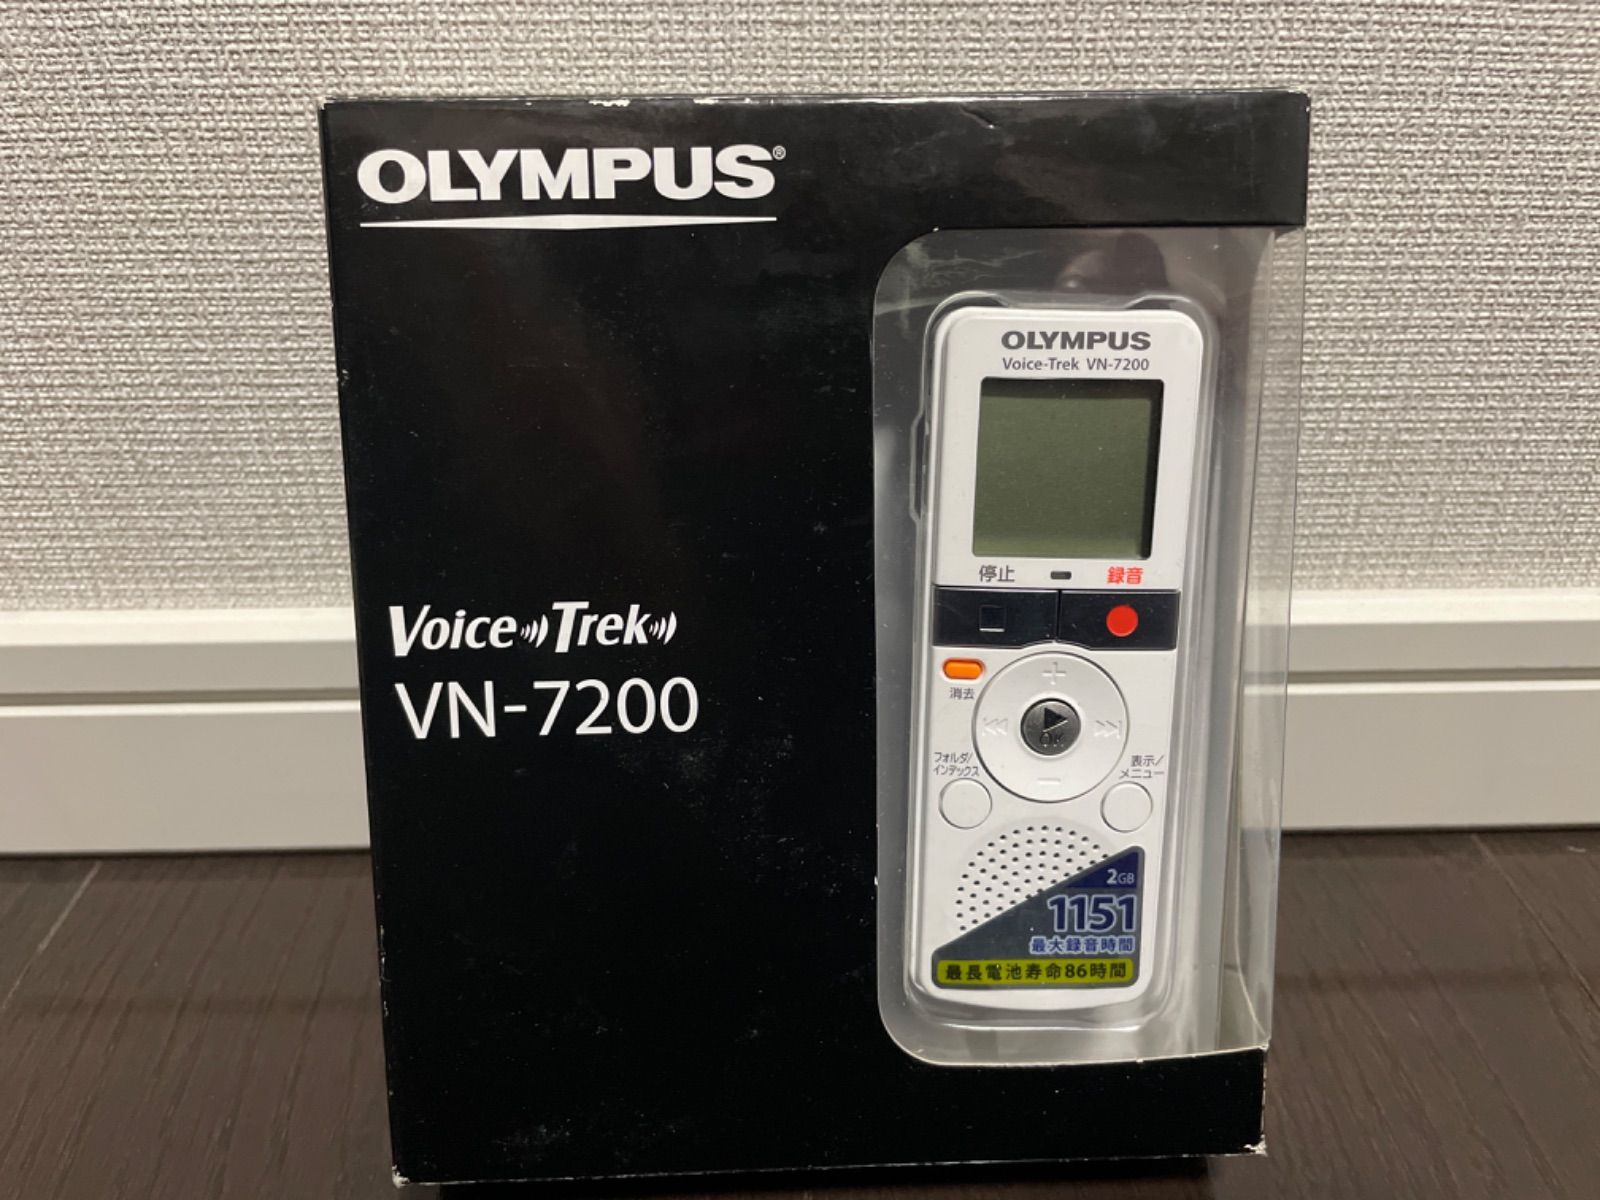 OLYMPUSオリンパス voice-Trek VN-7200ボイスレコーダー なんでもショップ メルカリ